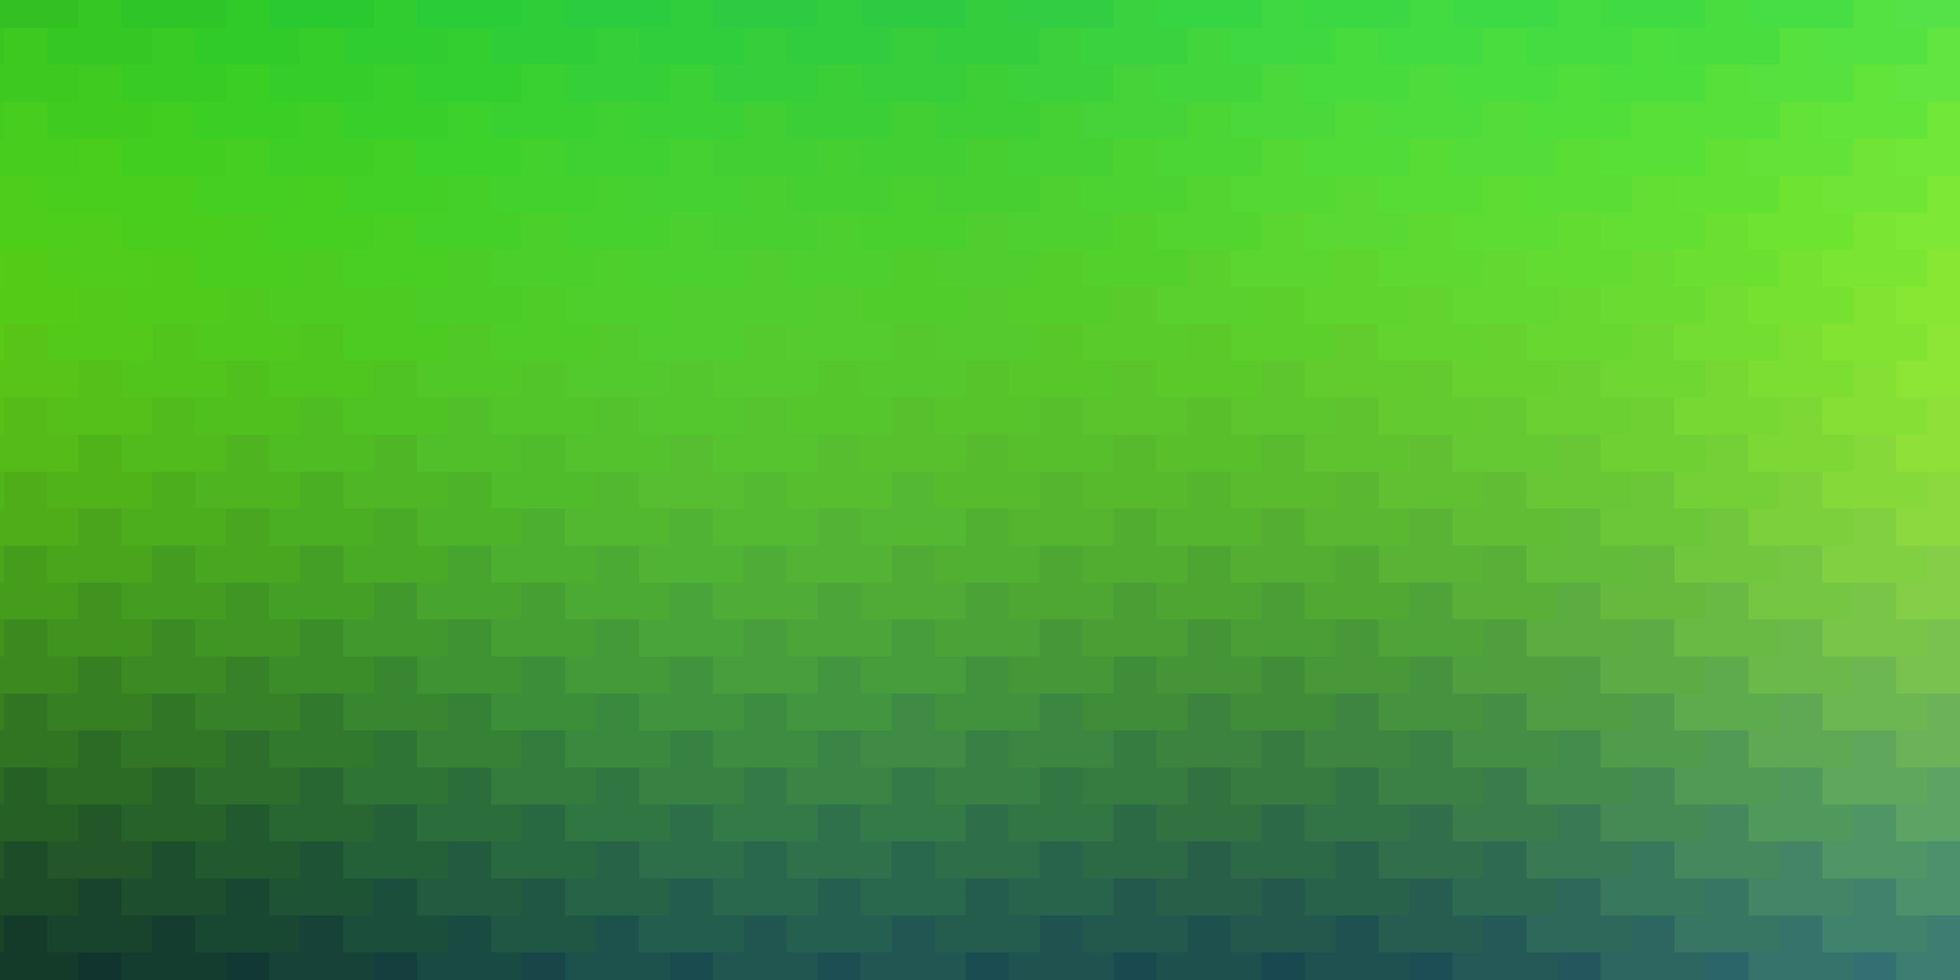 Light Blue, Green vector template in rectangles.